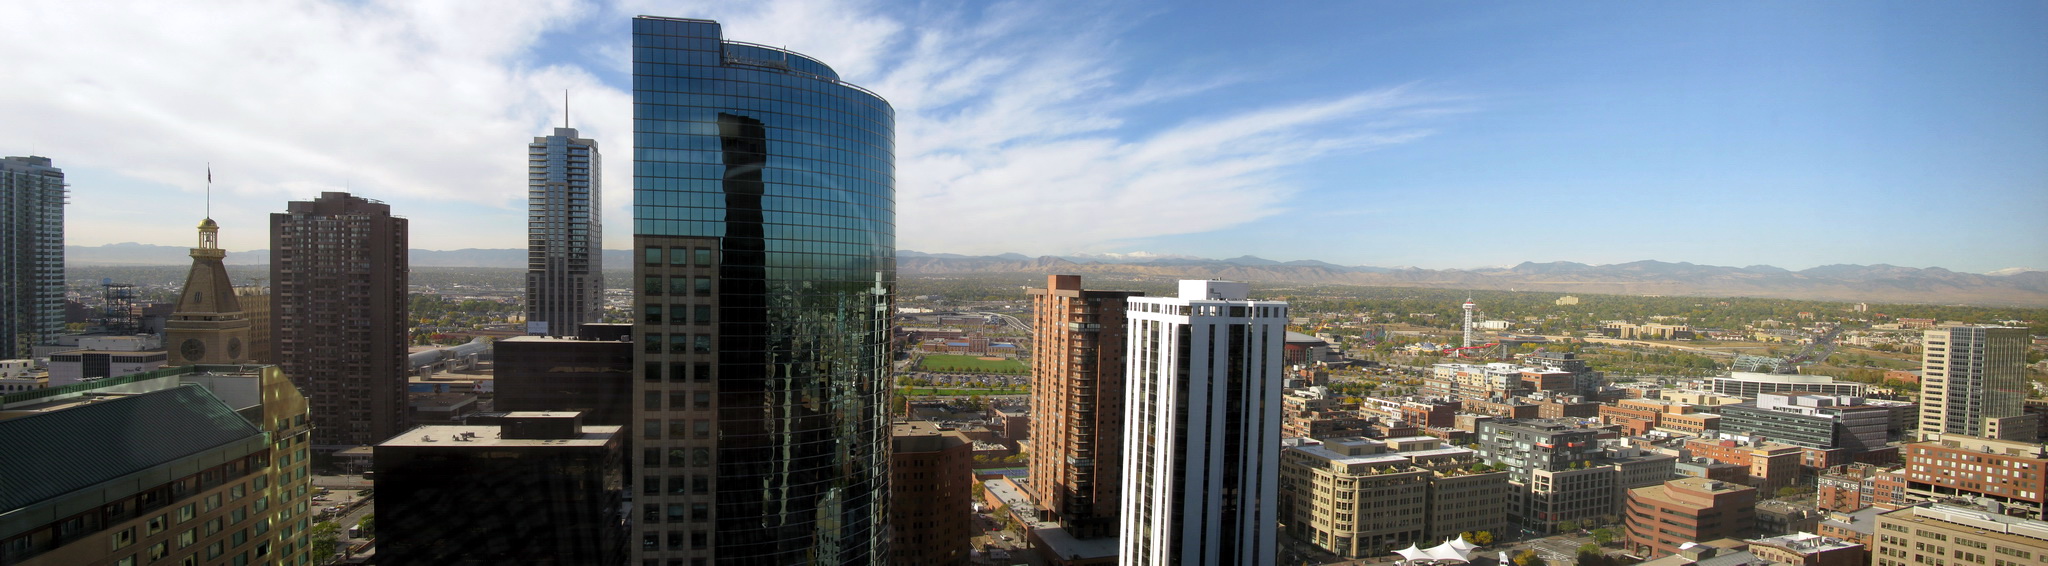 Denver Panorama